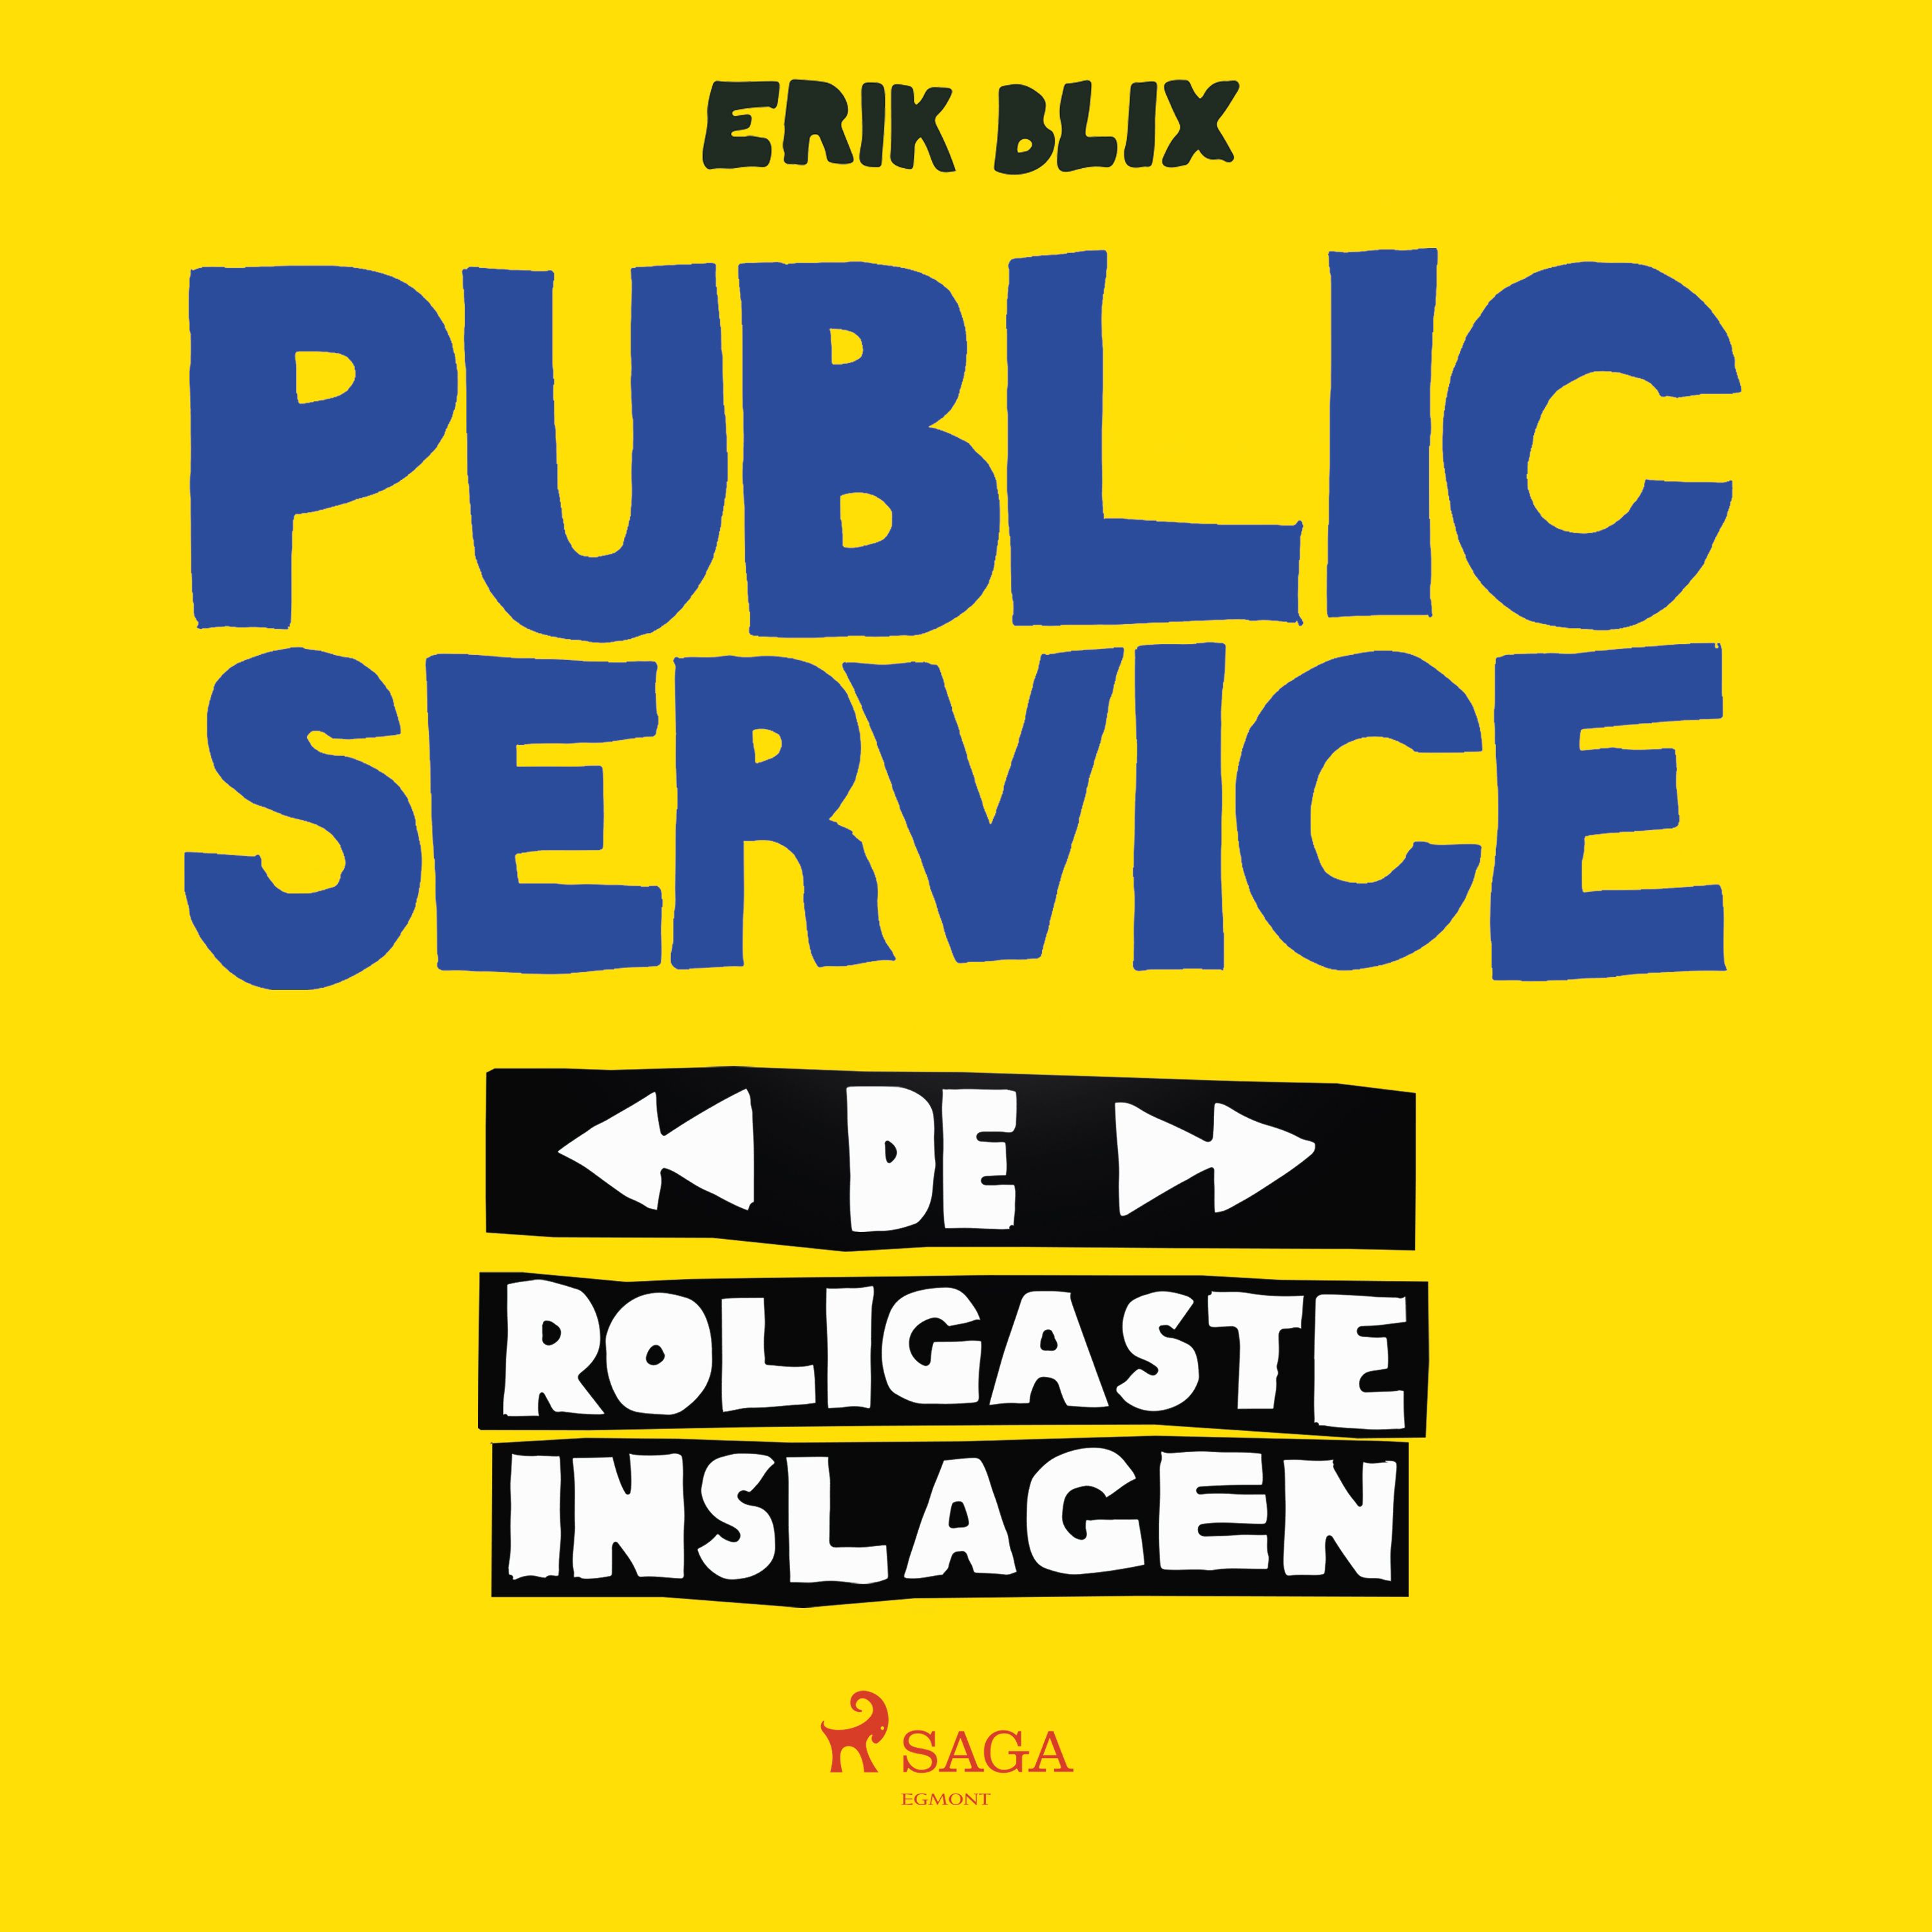 Public Service - de roligaste inslagen, audiobook by Erik Blix